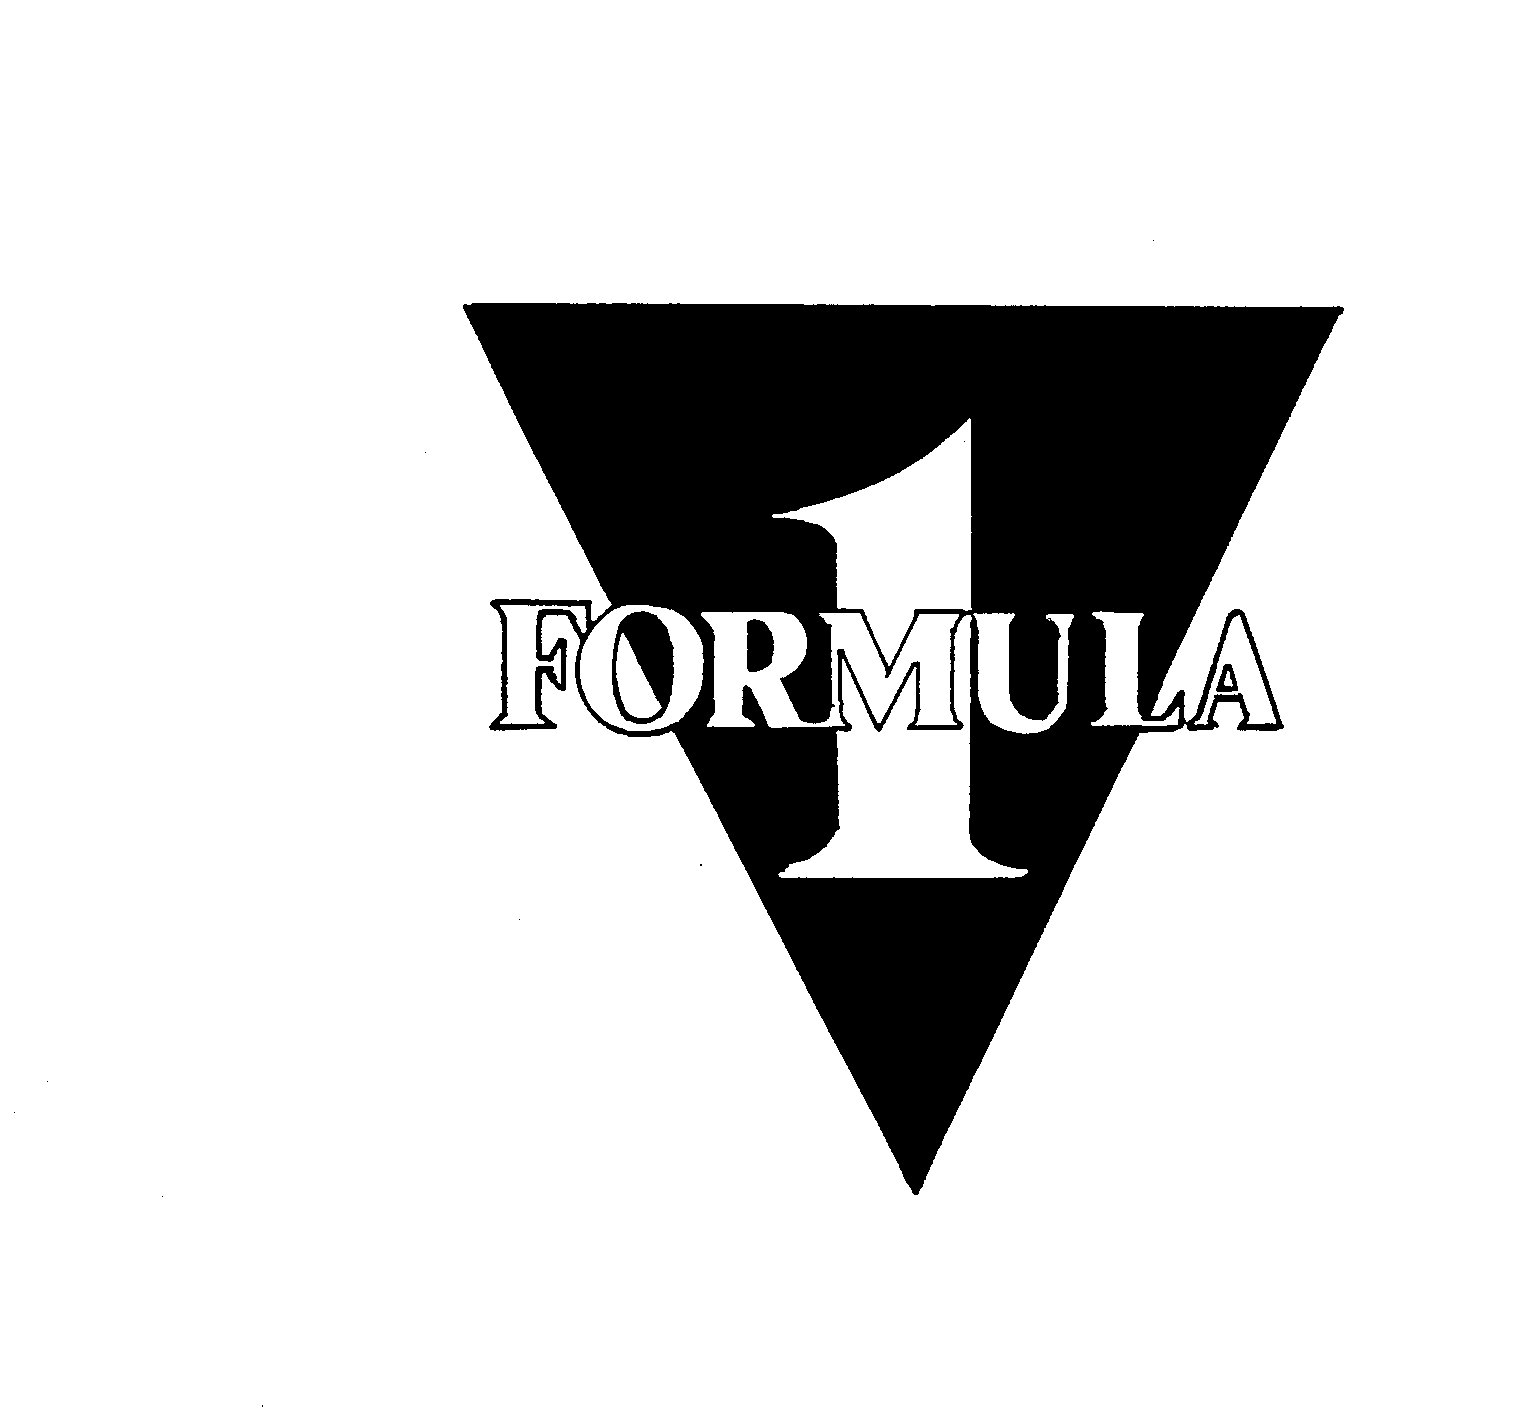  FORMULA 1